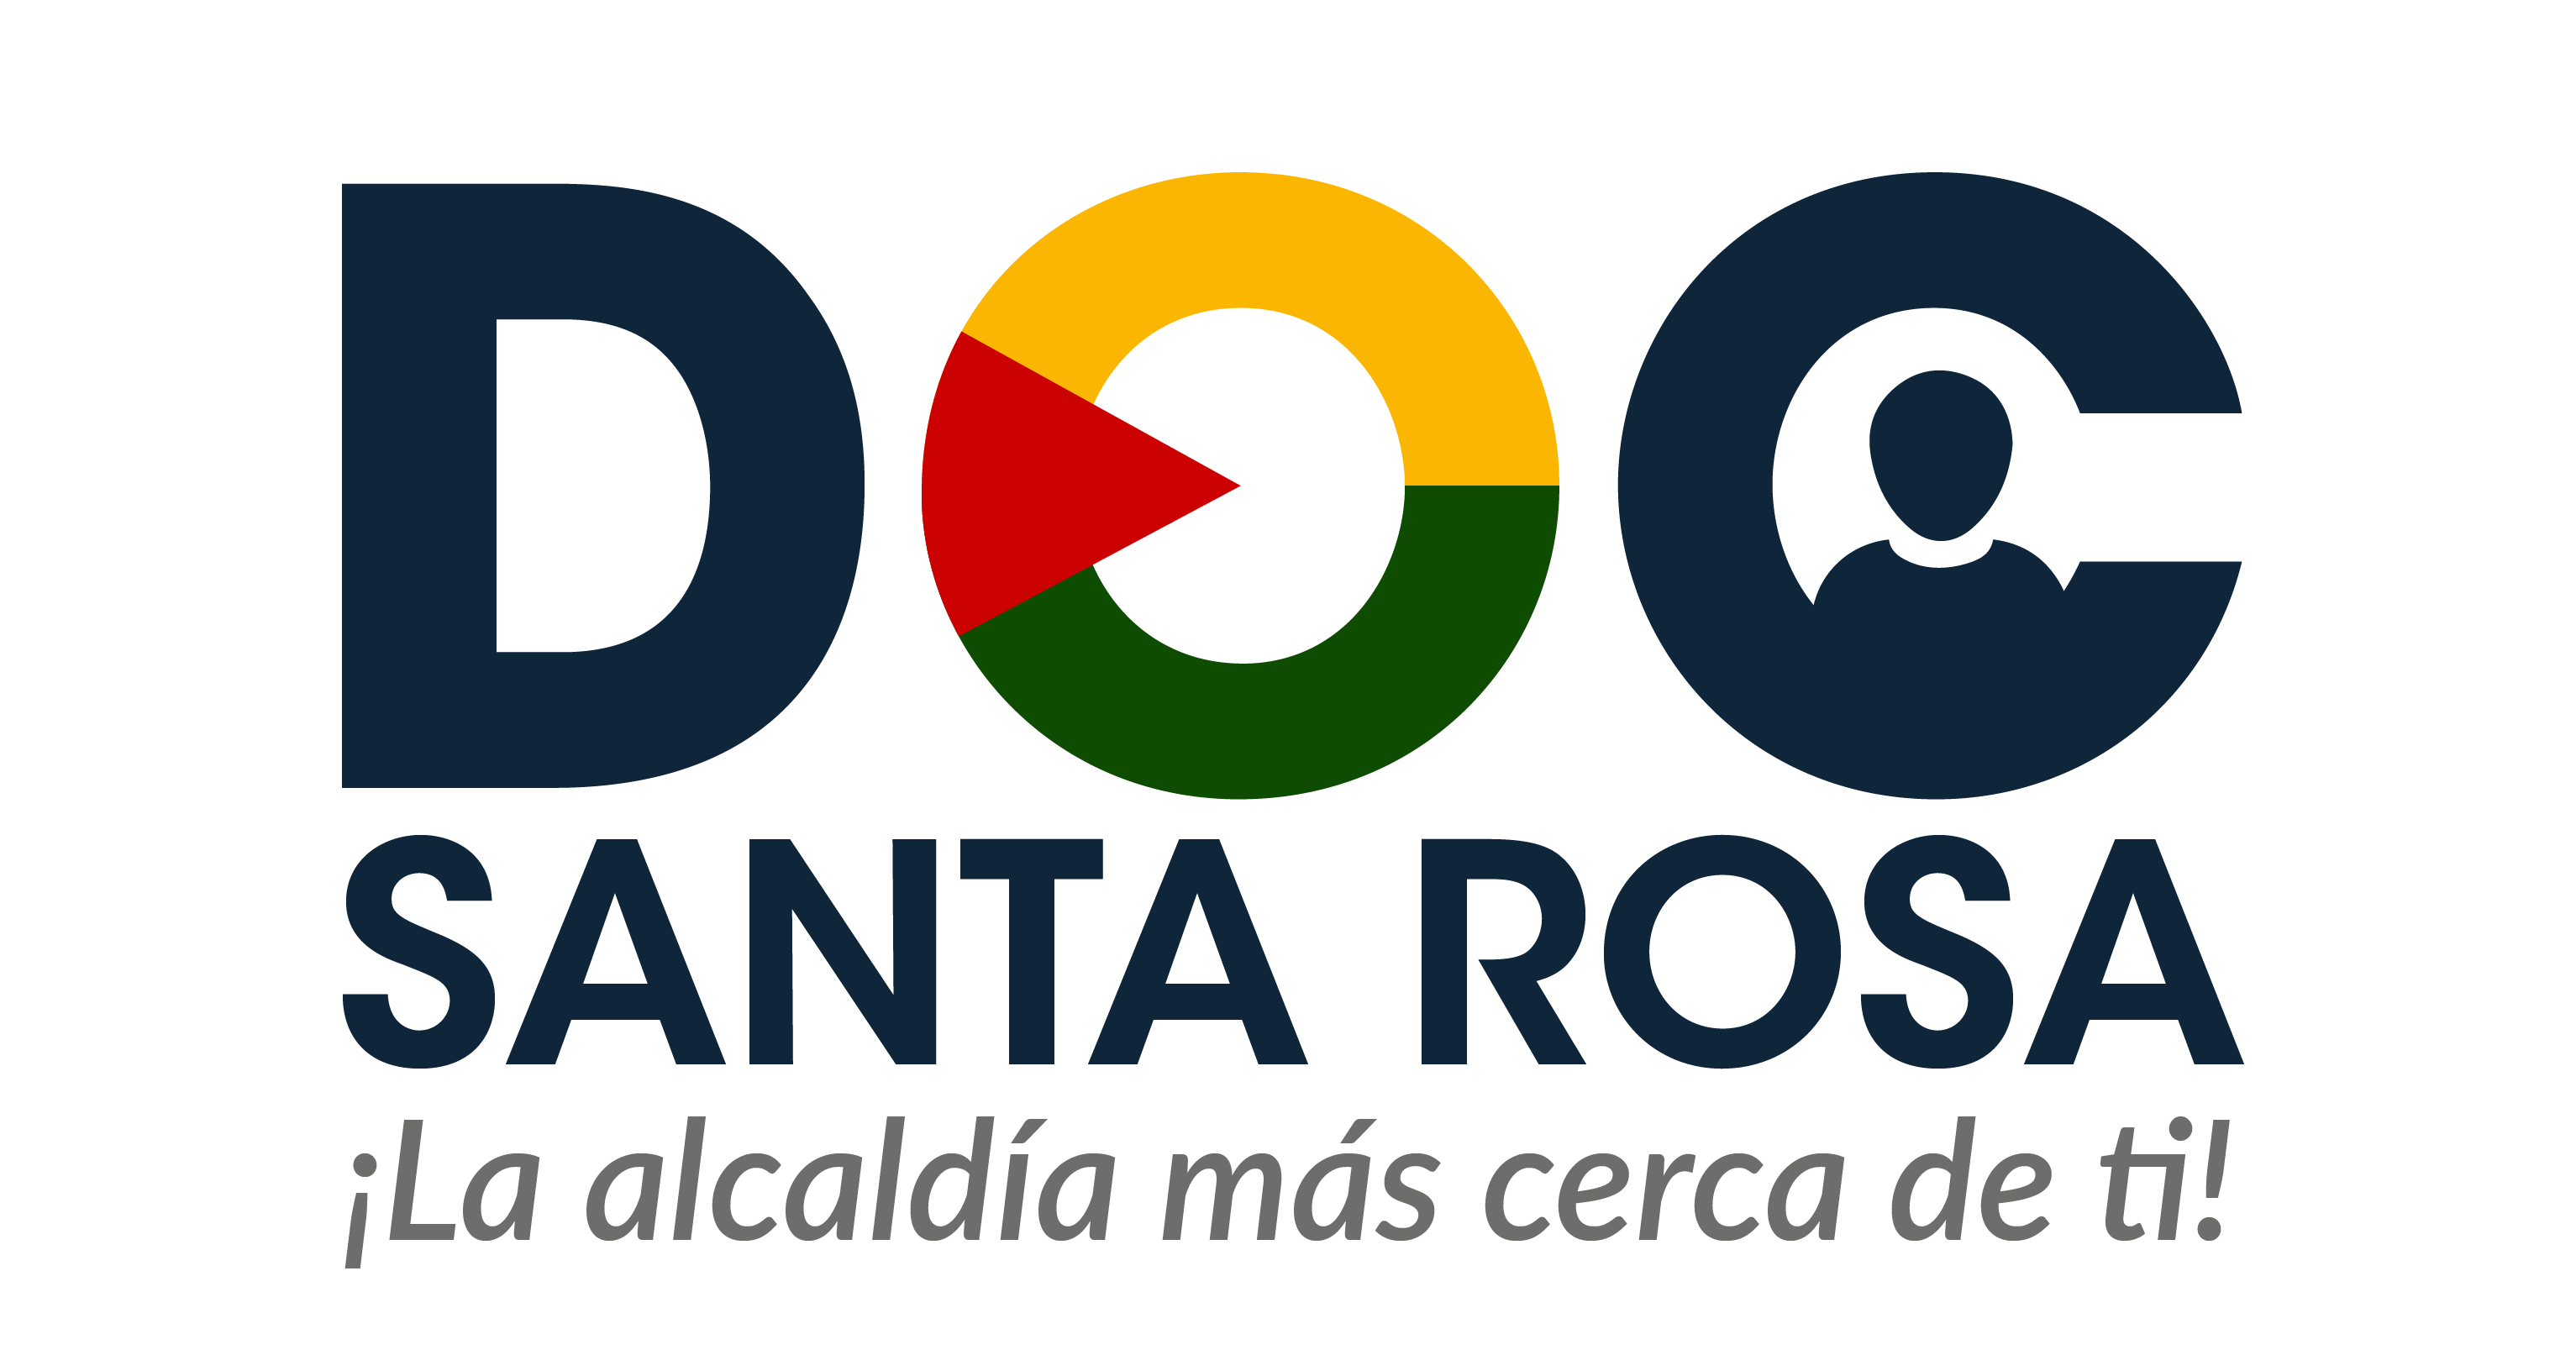 eDoc Santa Rosa